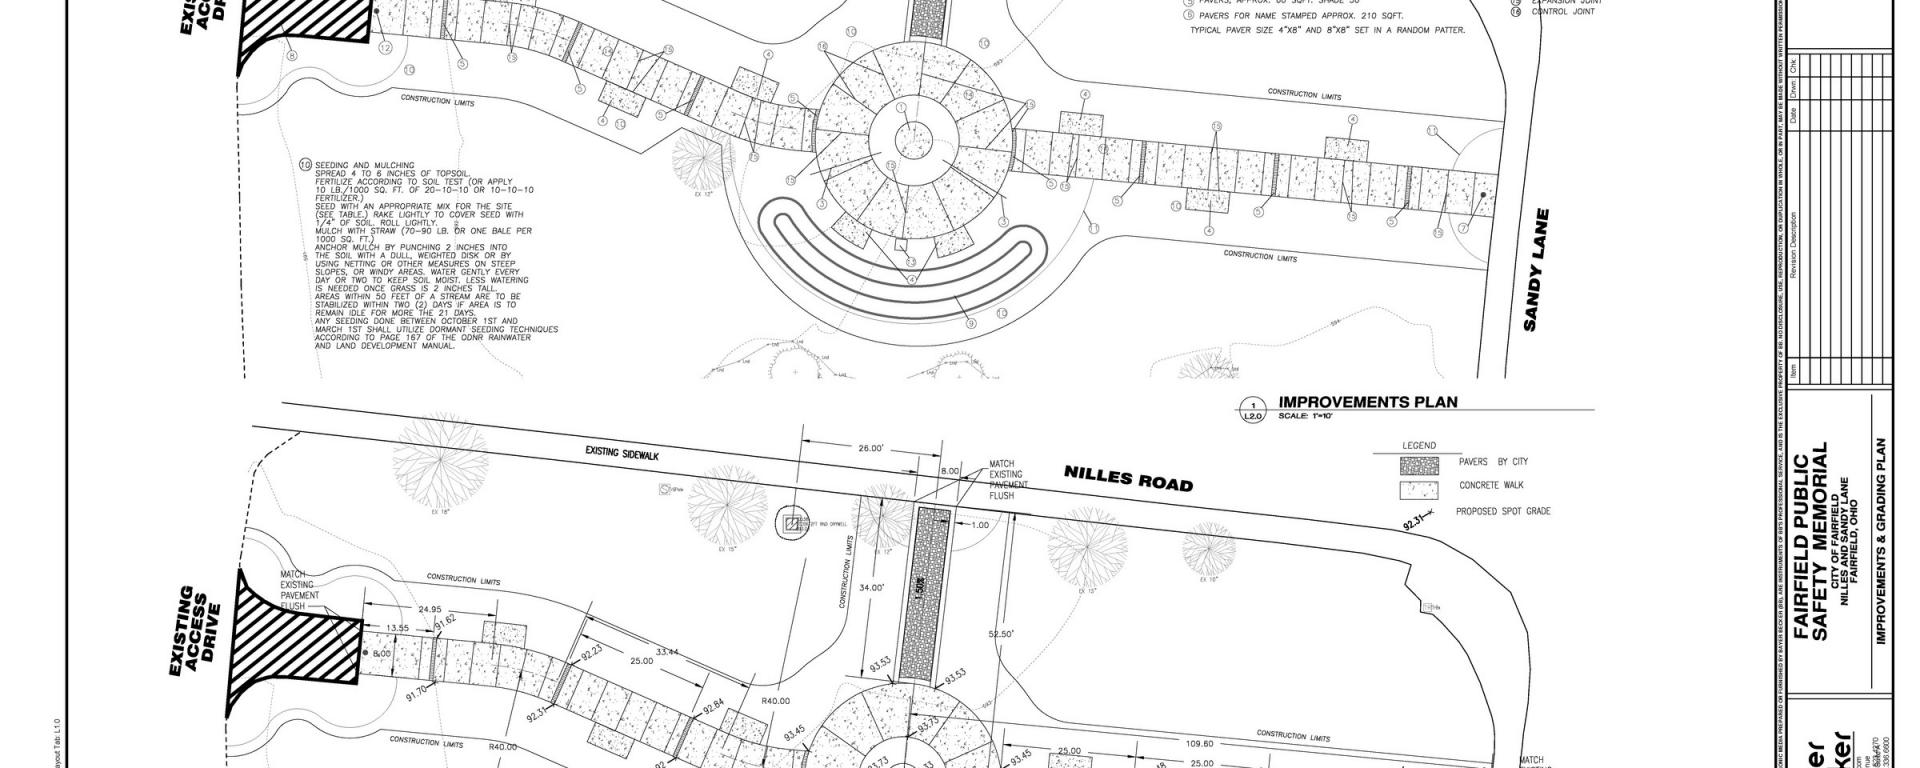 rendering plans of the memorial